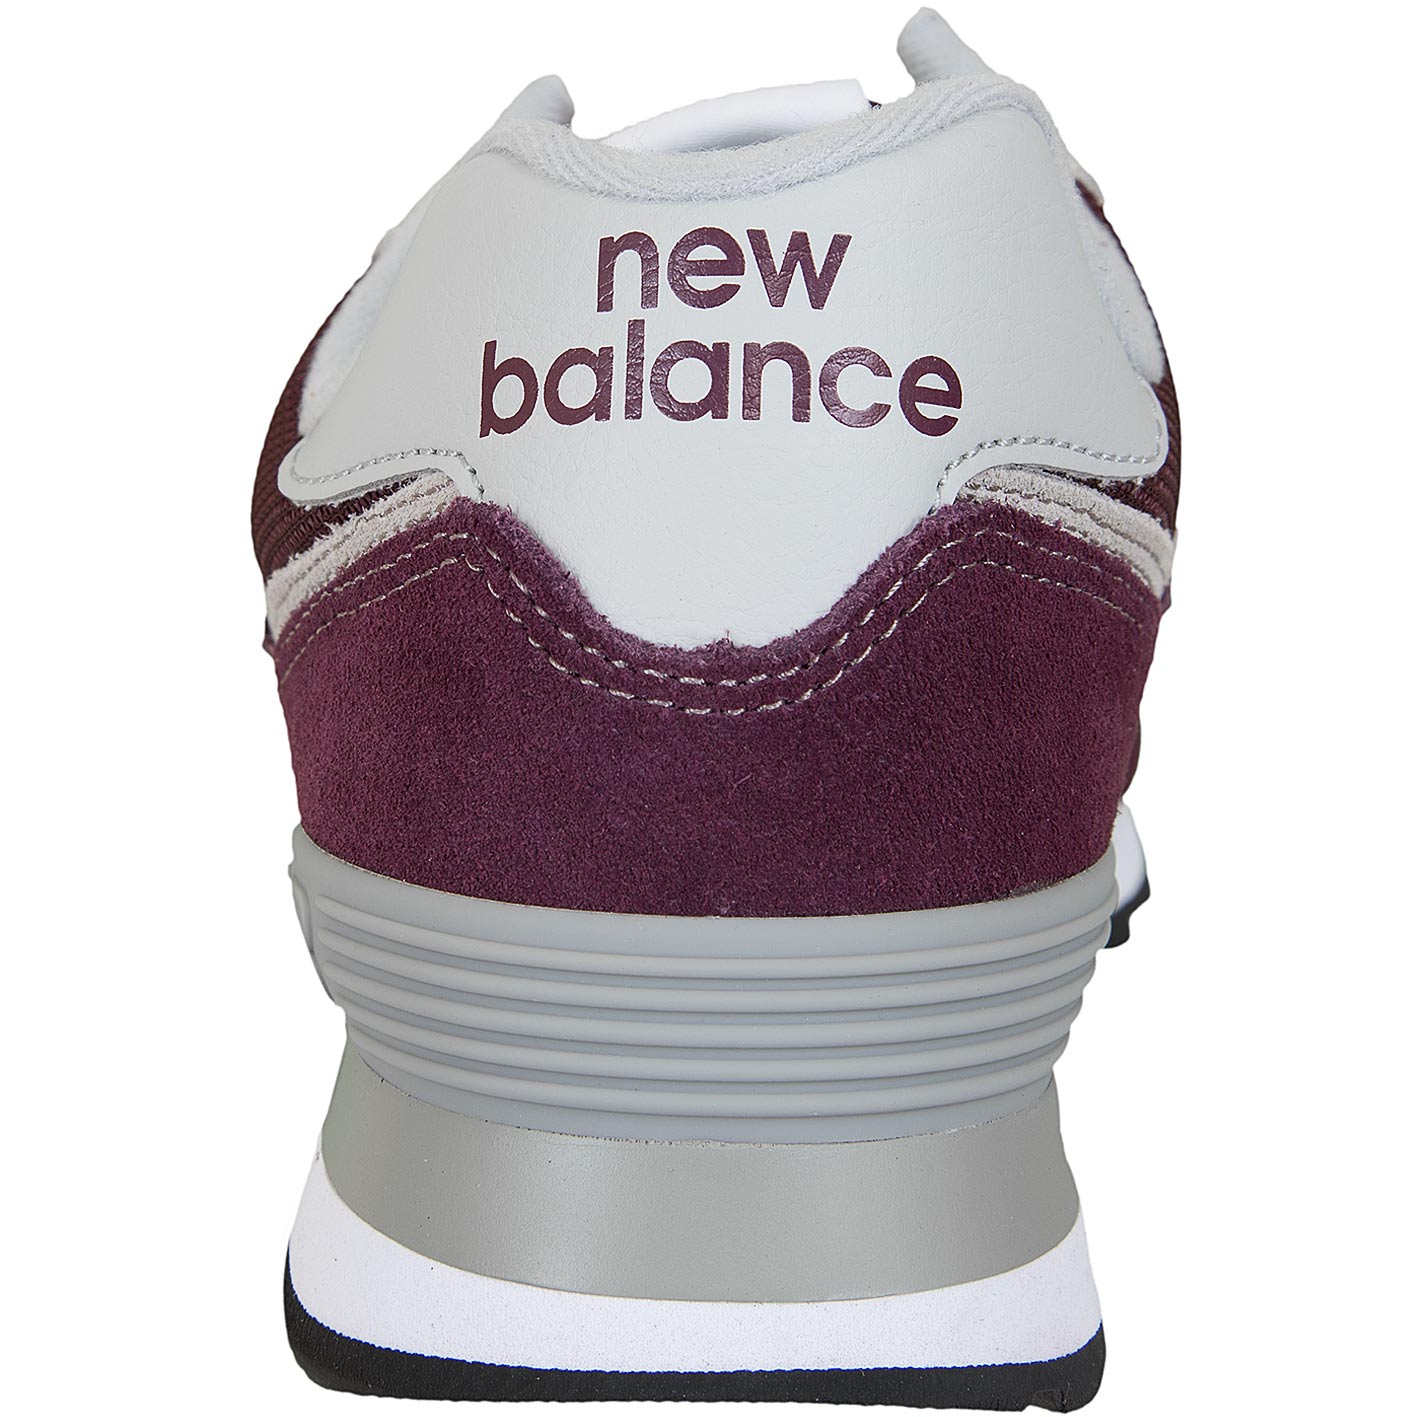 ☆ New Balance Sneaker 574 Wildleder/Mesh/Synthetik weinrot - hier bestellen!